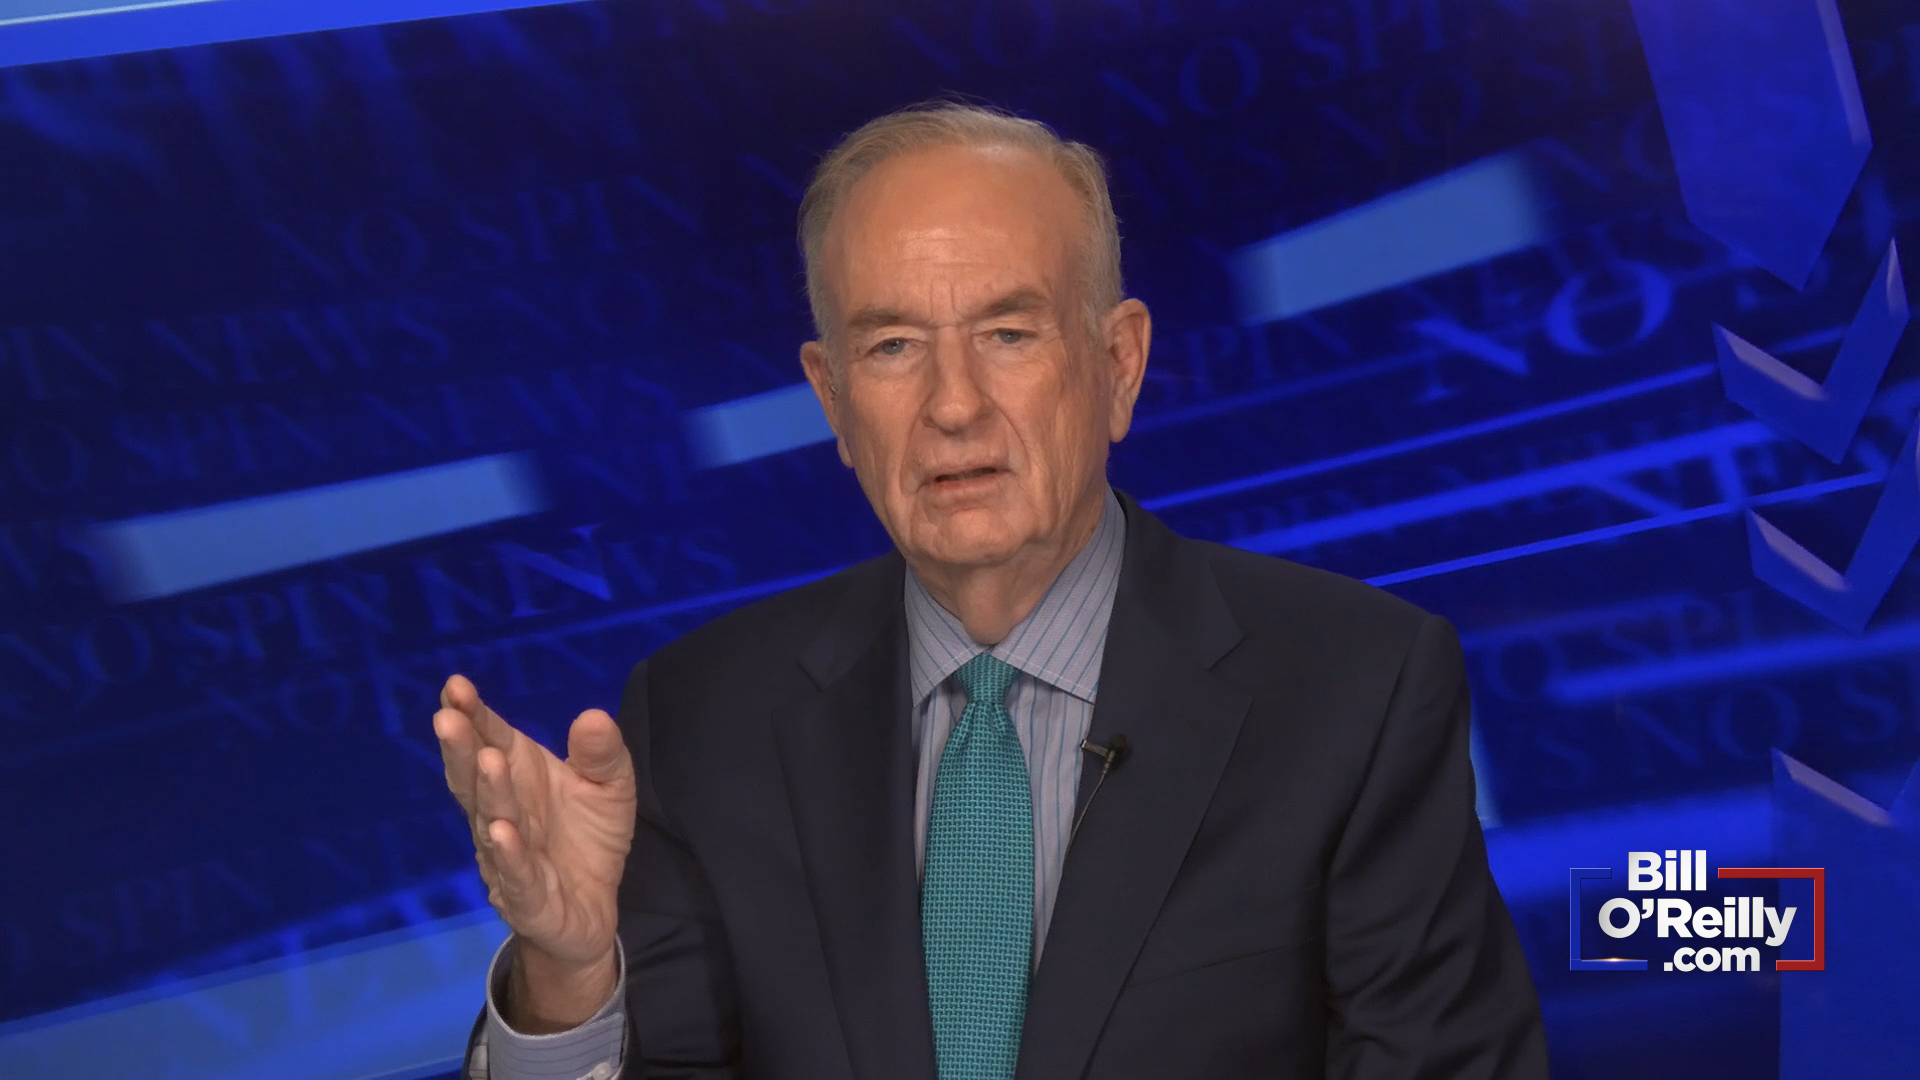 O'Reilly: Joe Biden Should Fear Judgment Day